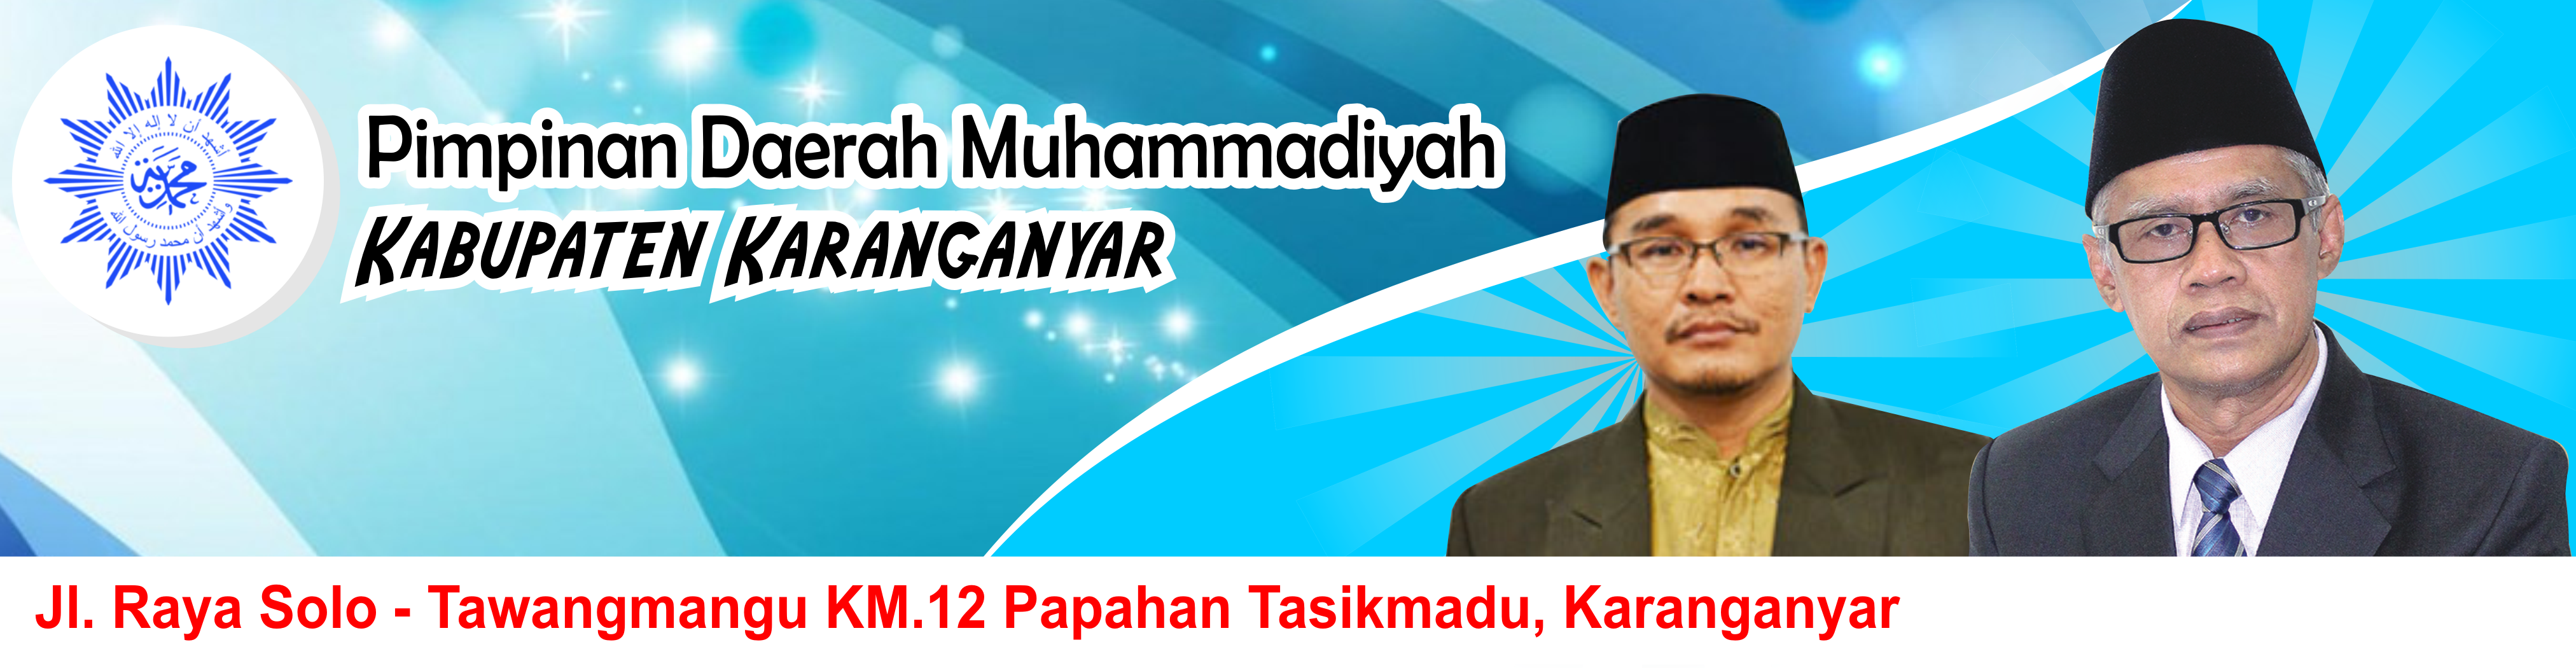 Majelis Pendidikan Dasar dan Menengah Pimpinan Daerah Muhammadiyah Kabupaten Karanganyar